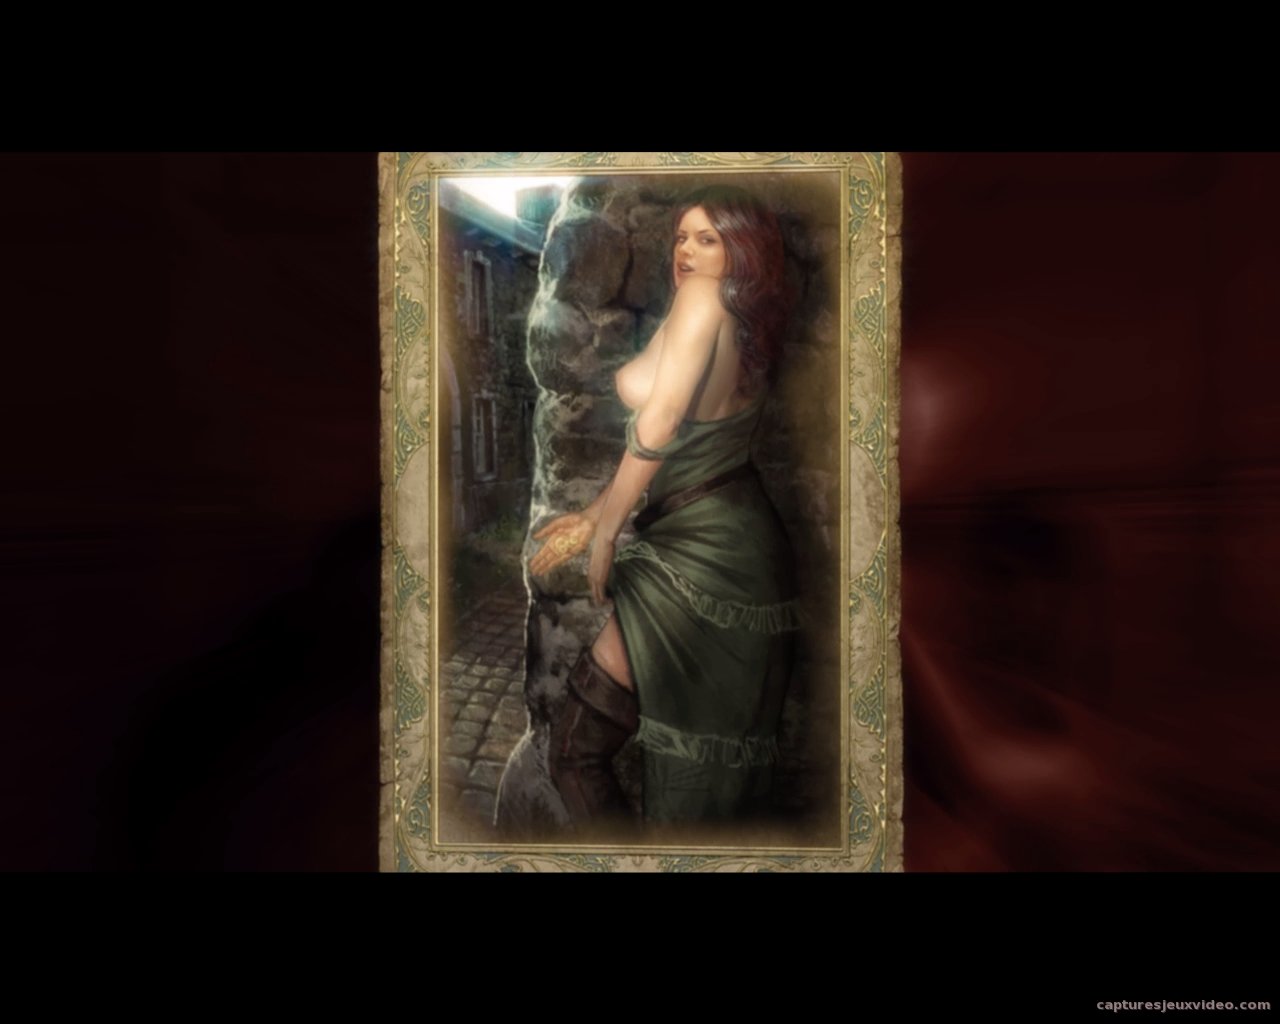 Carte du jeu sexy - The Witcher capture image